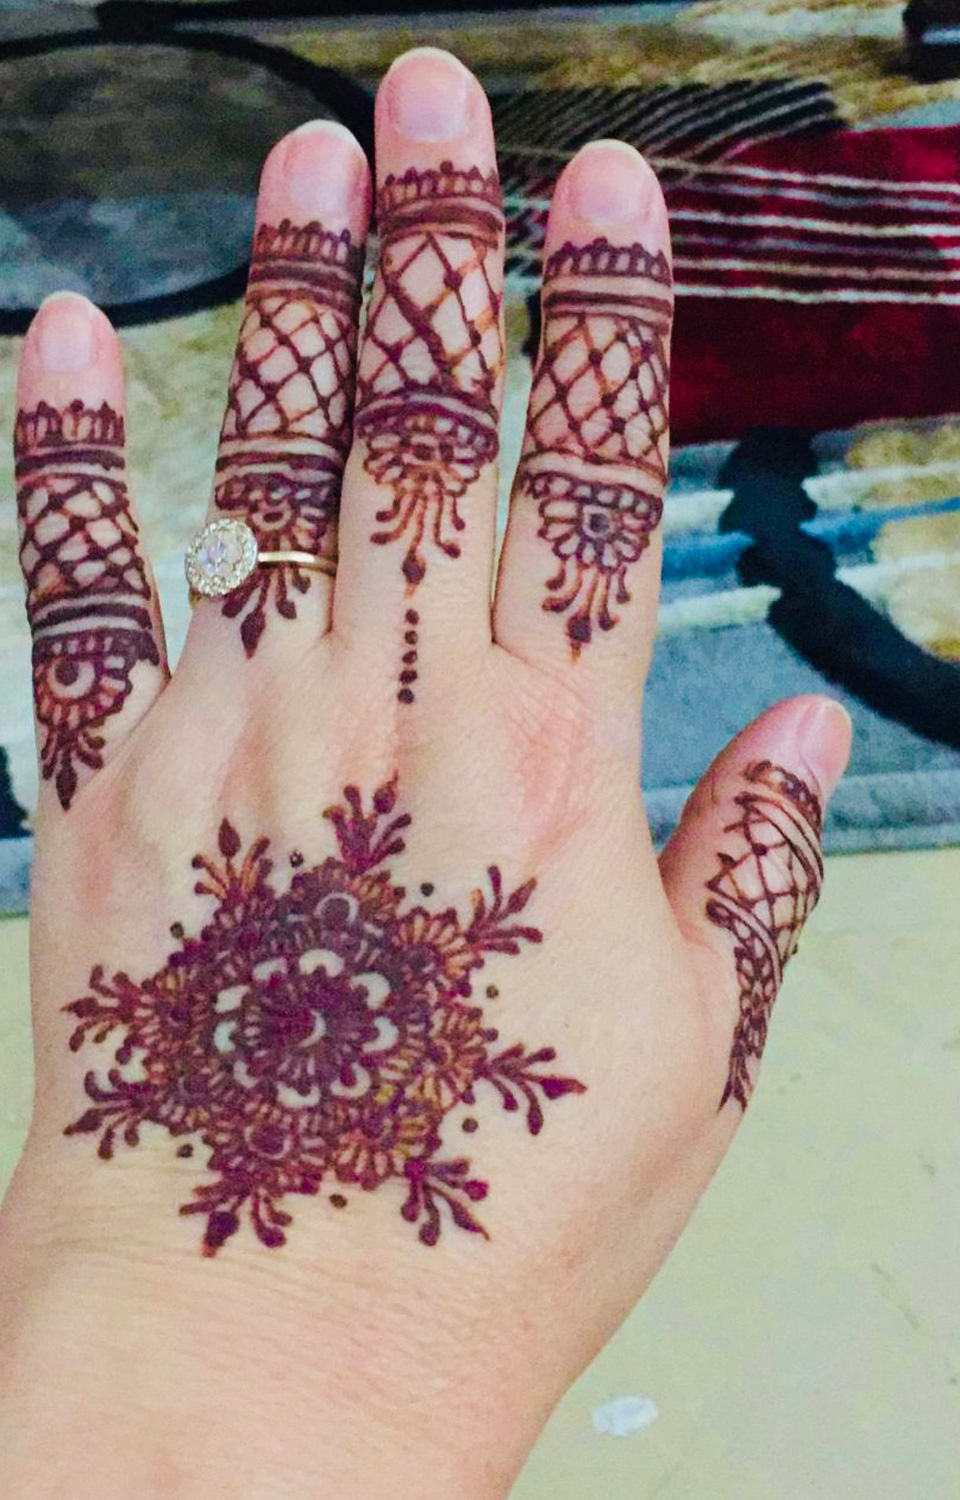 Decorative henna hand painting.